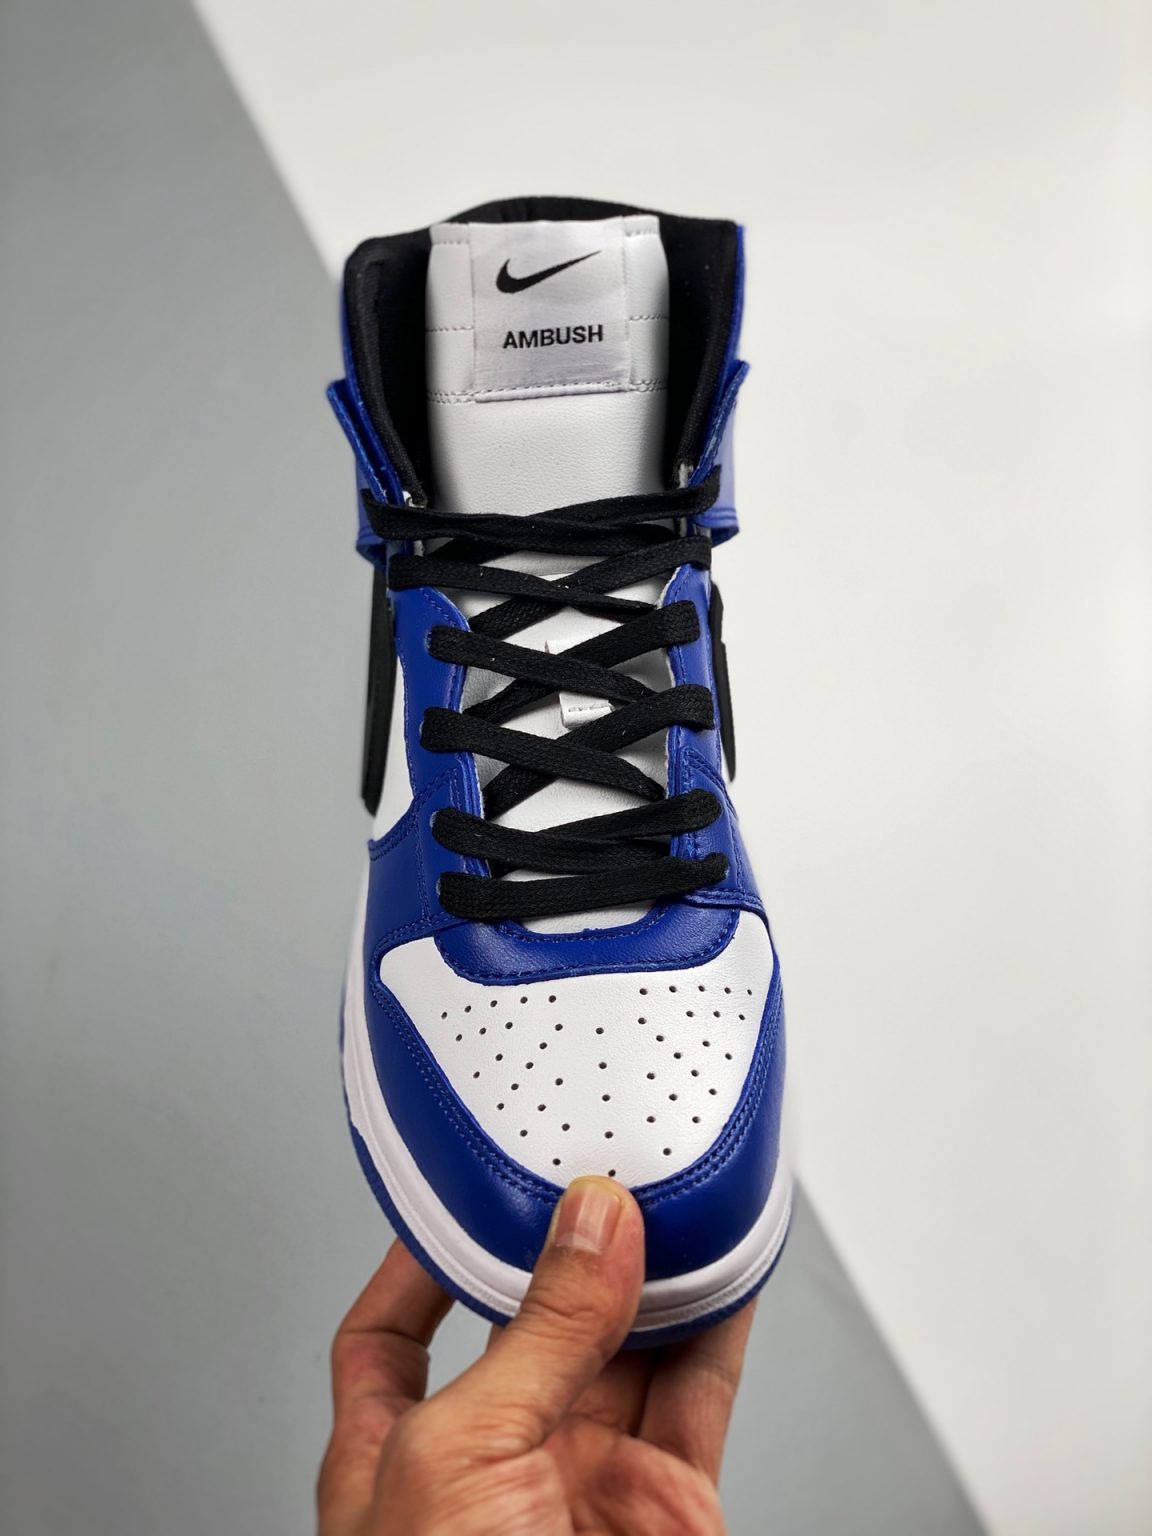 Ambush x Nike Dunk High “Deep Royal Blue” CU7544-400 For Sale – Sneaker